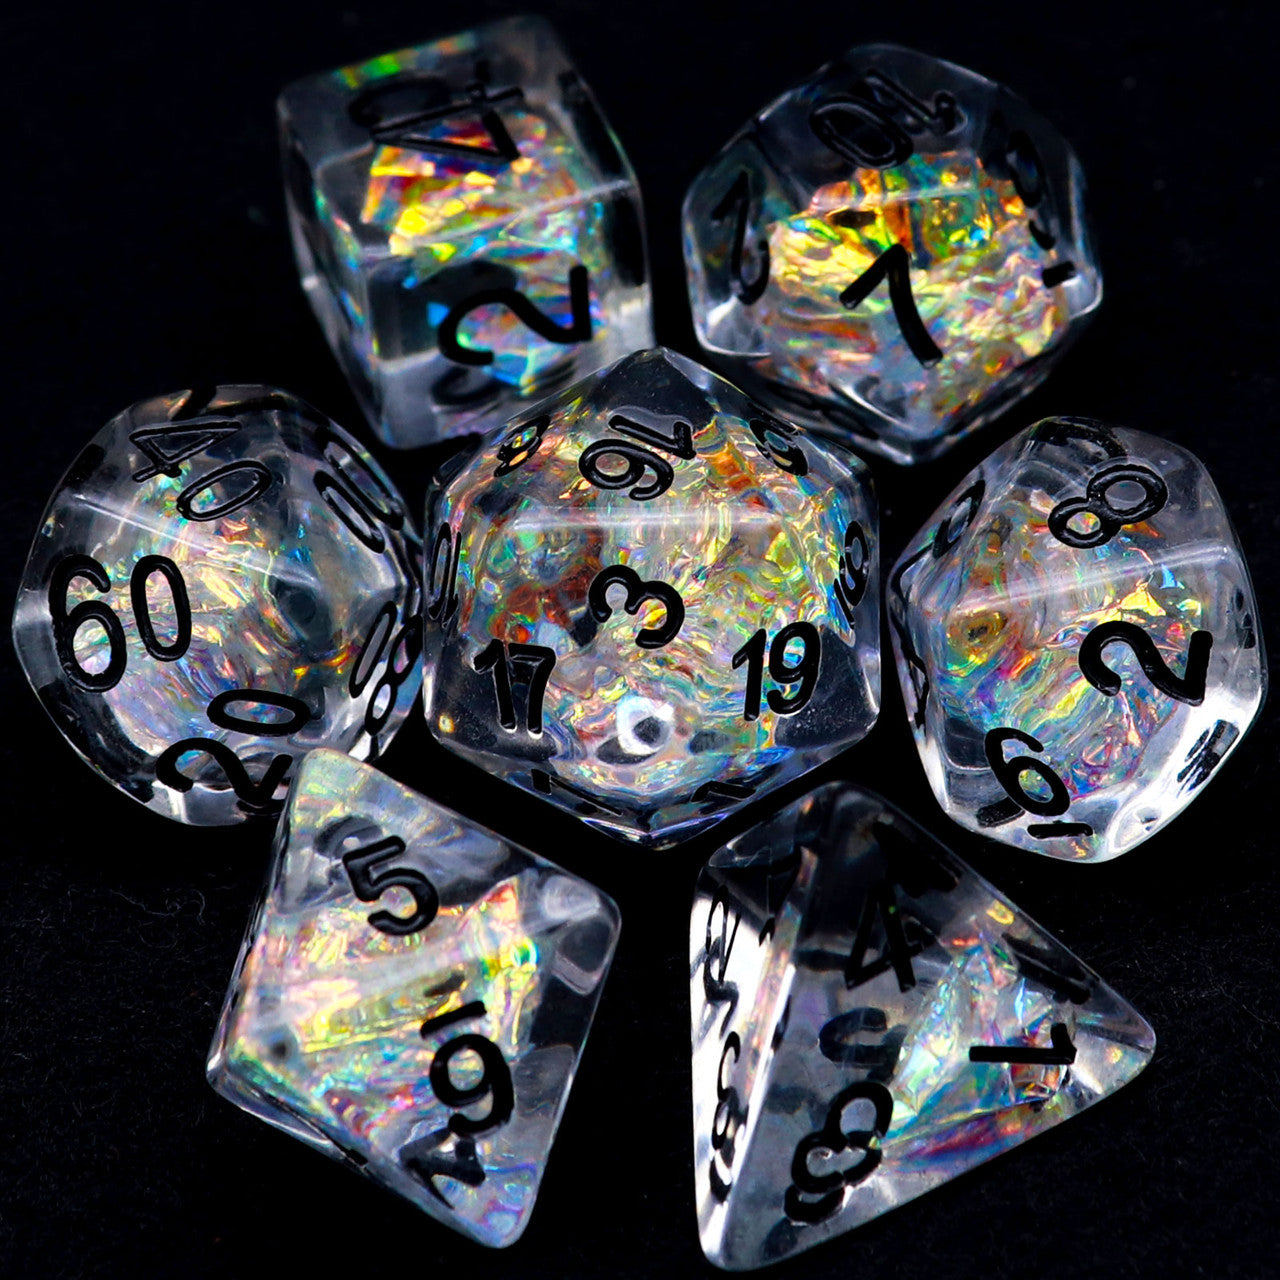 Iridescent dice, clear dice